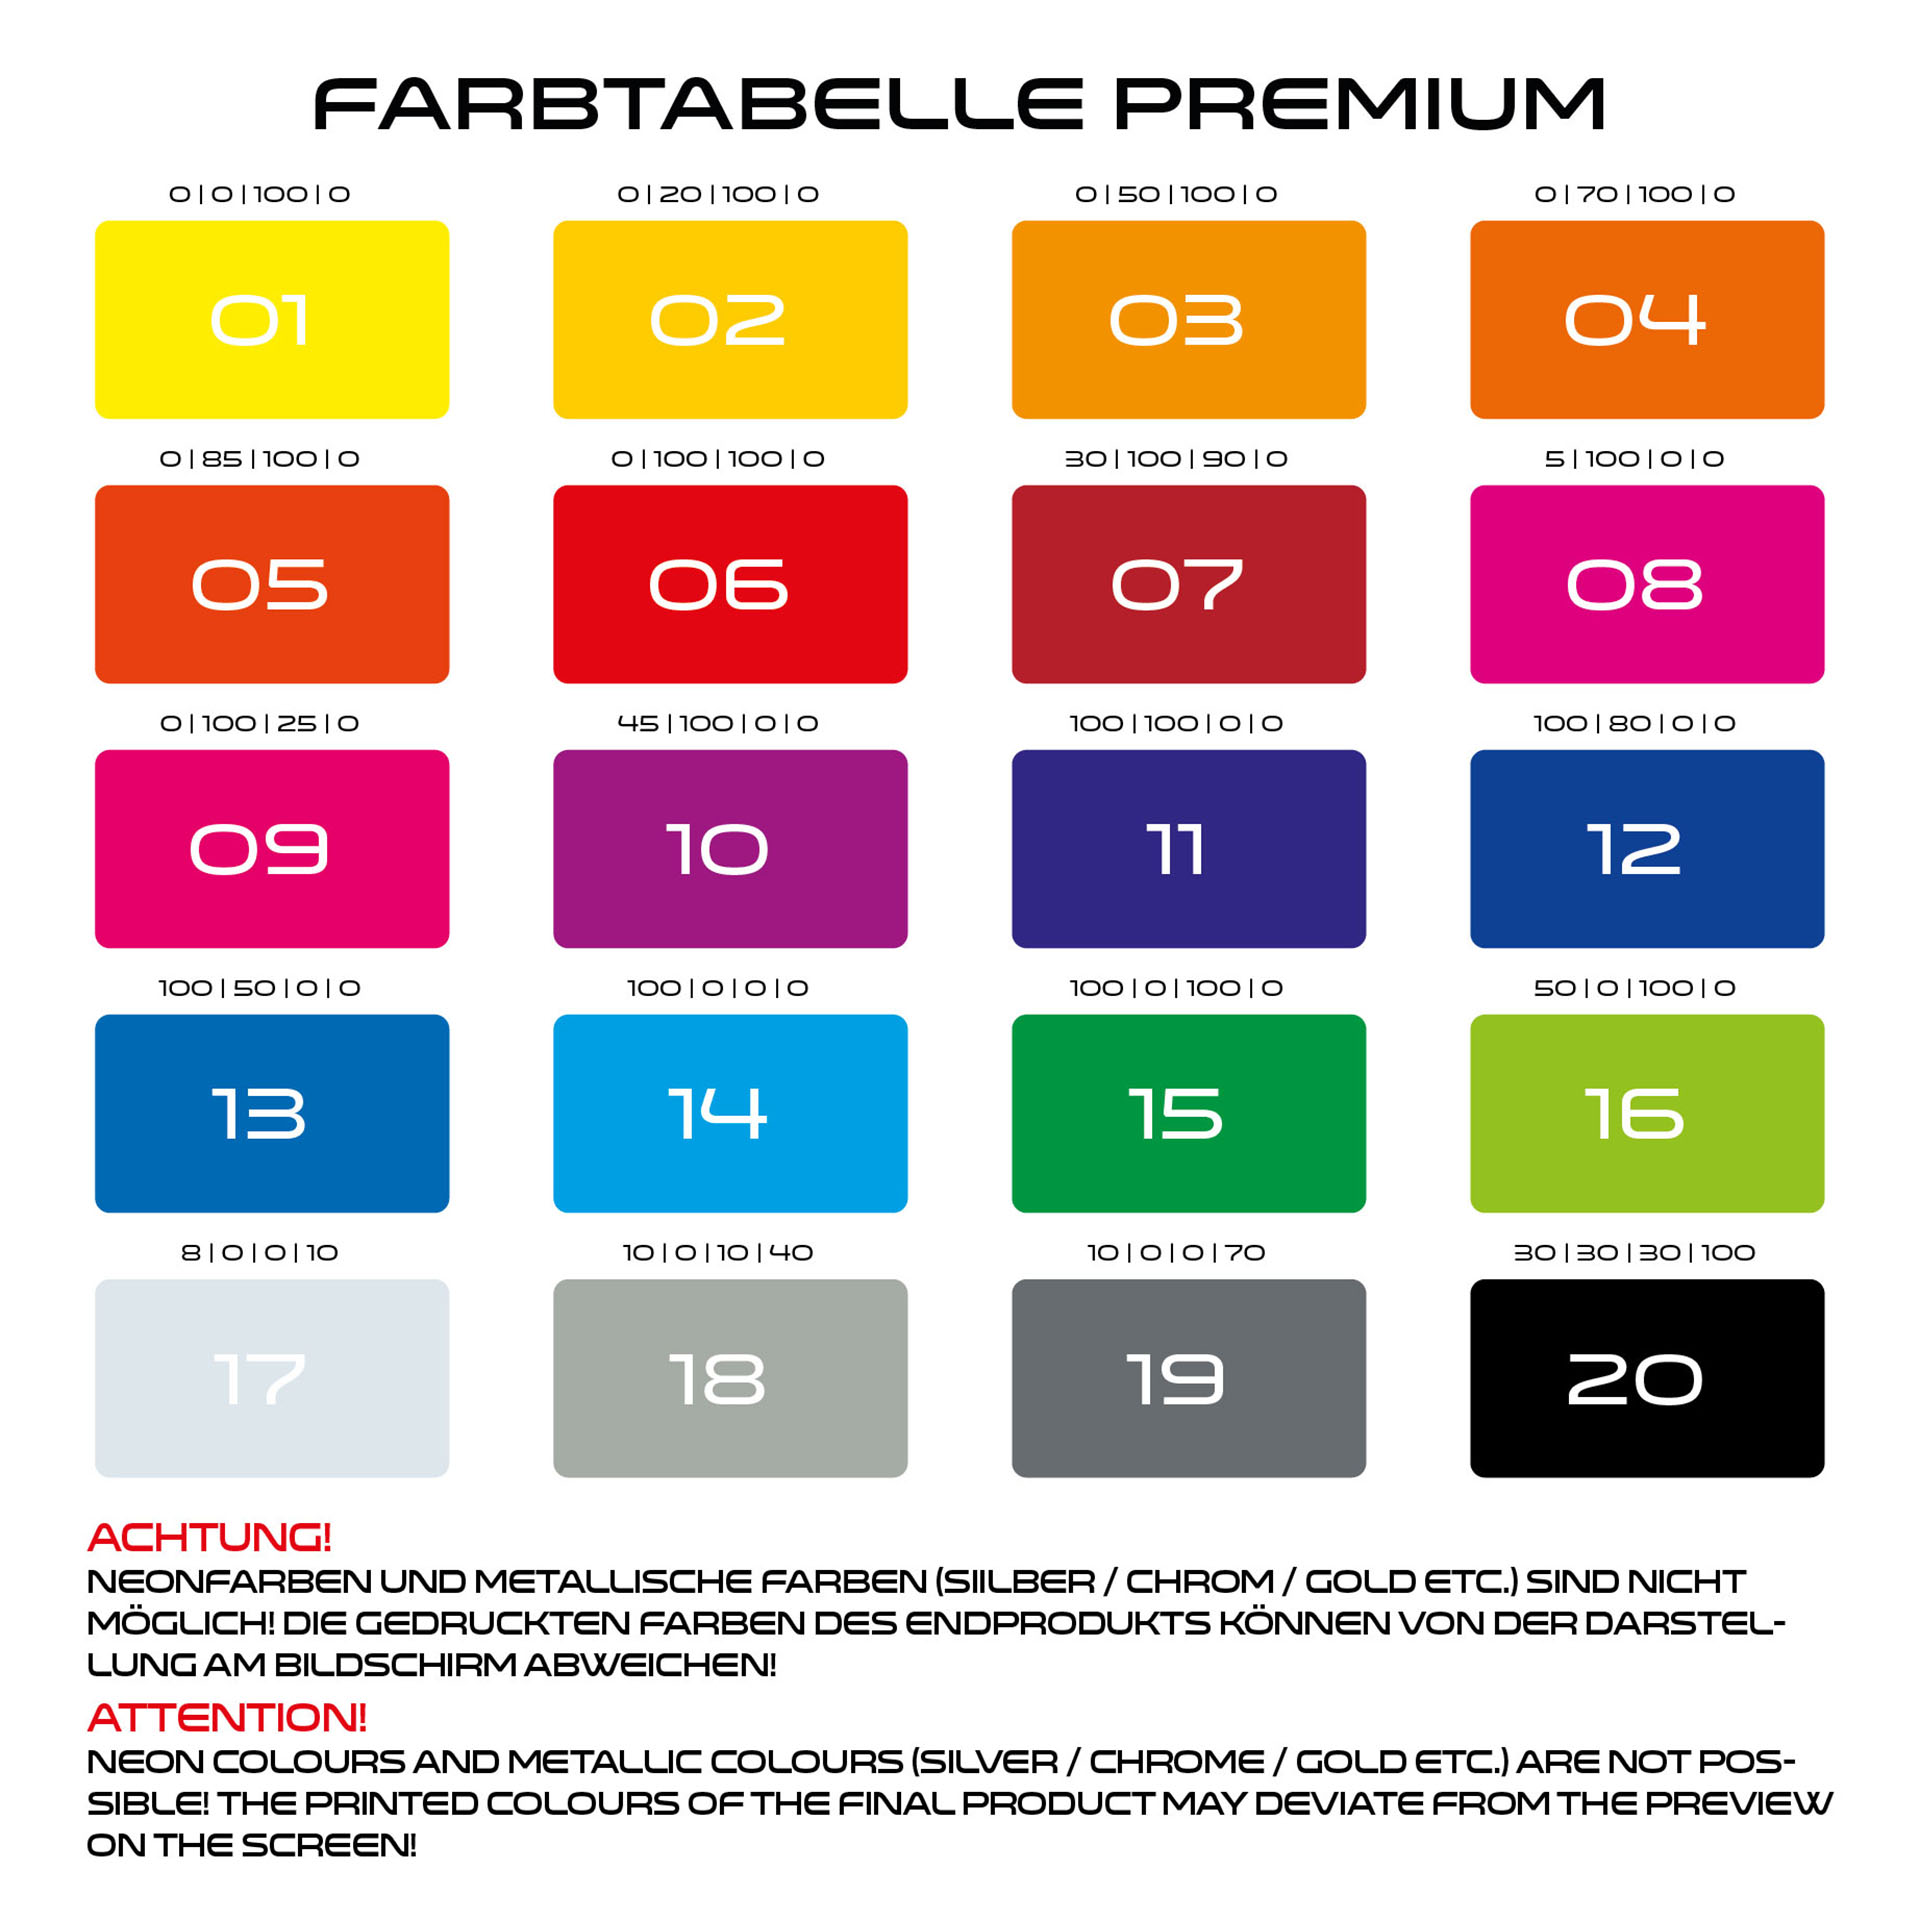 Cafe Racer Felgenaufkleber Premium Design Grid W Farbtabelle Premium Wheelsticker